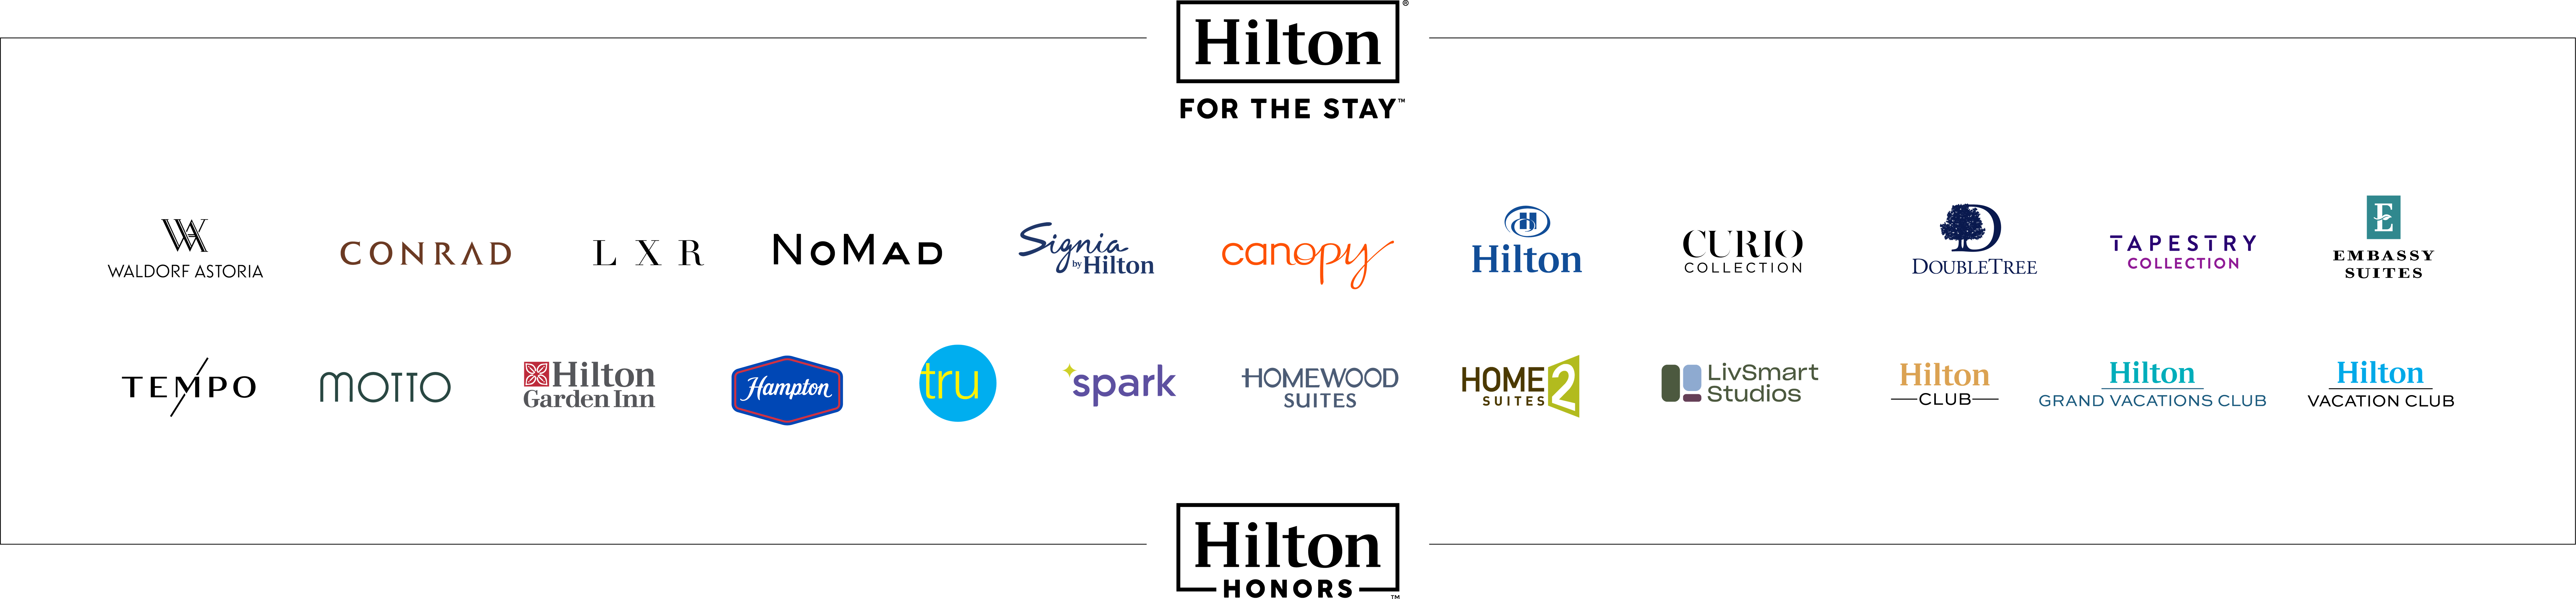 Logos for Hilton's brands